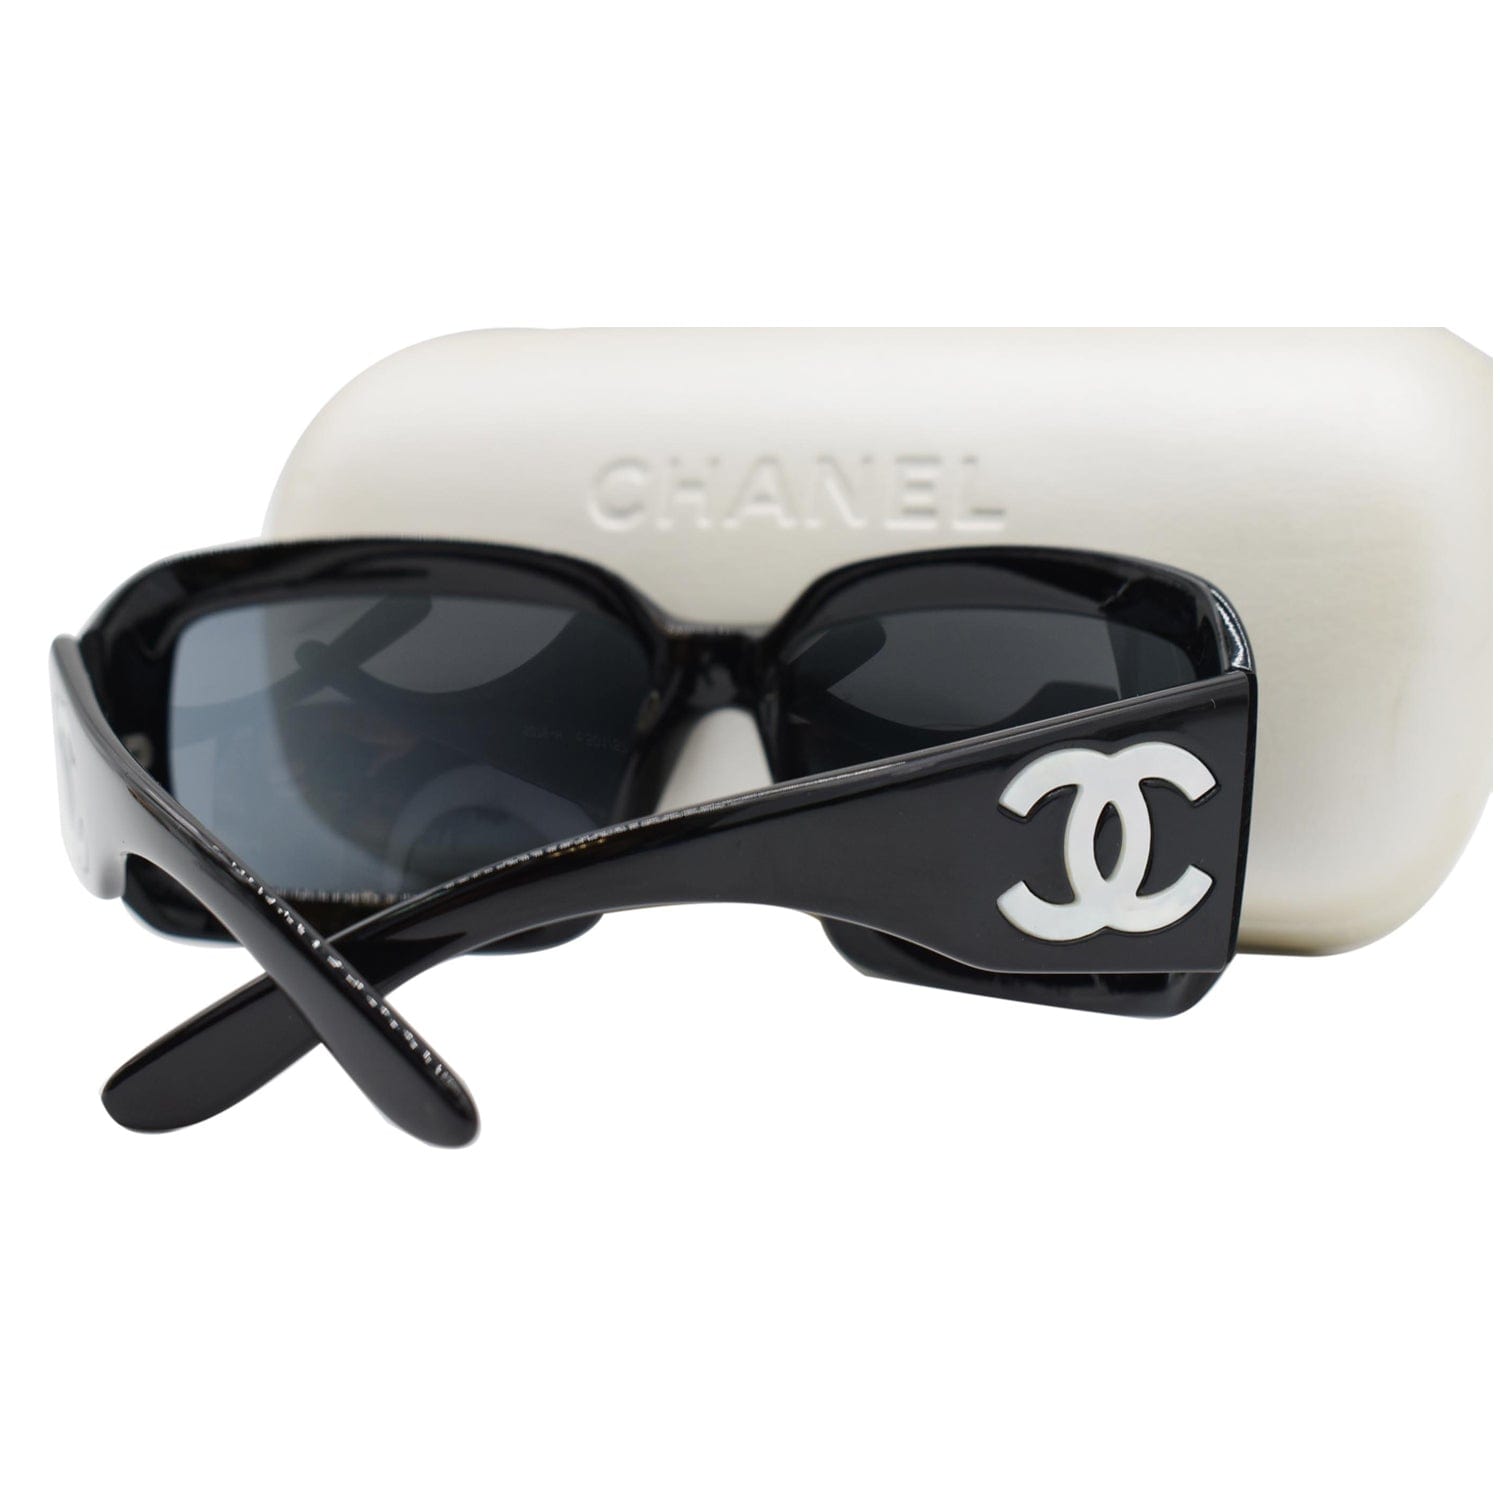 CHANEL sunglasses 5076-HC.538 / 13